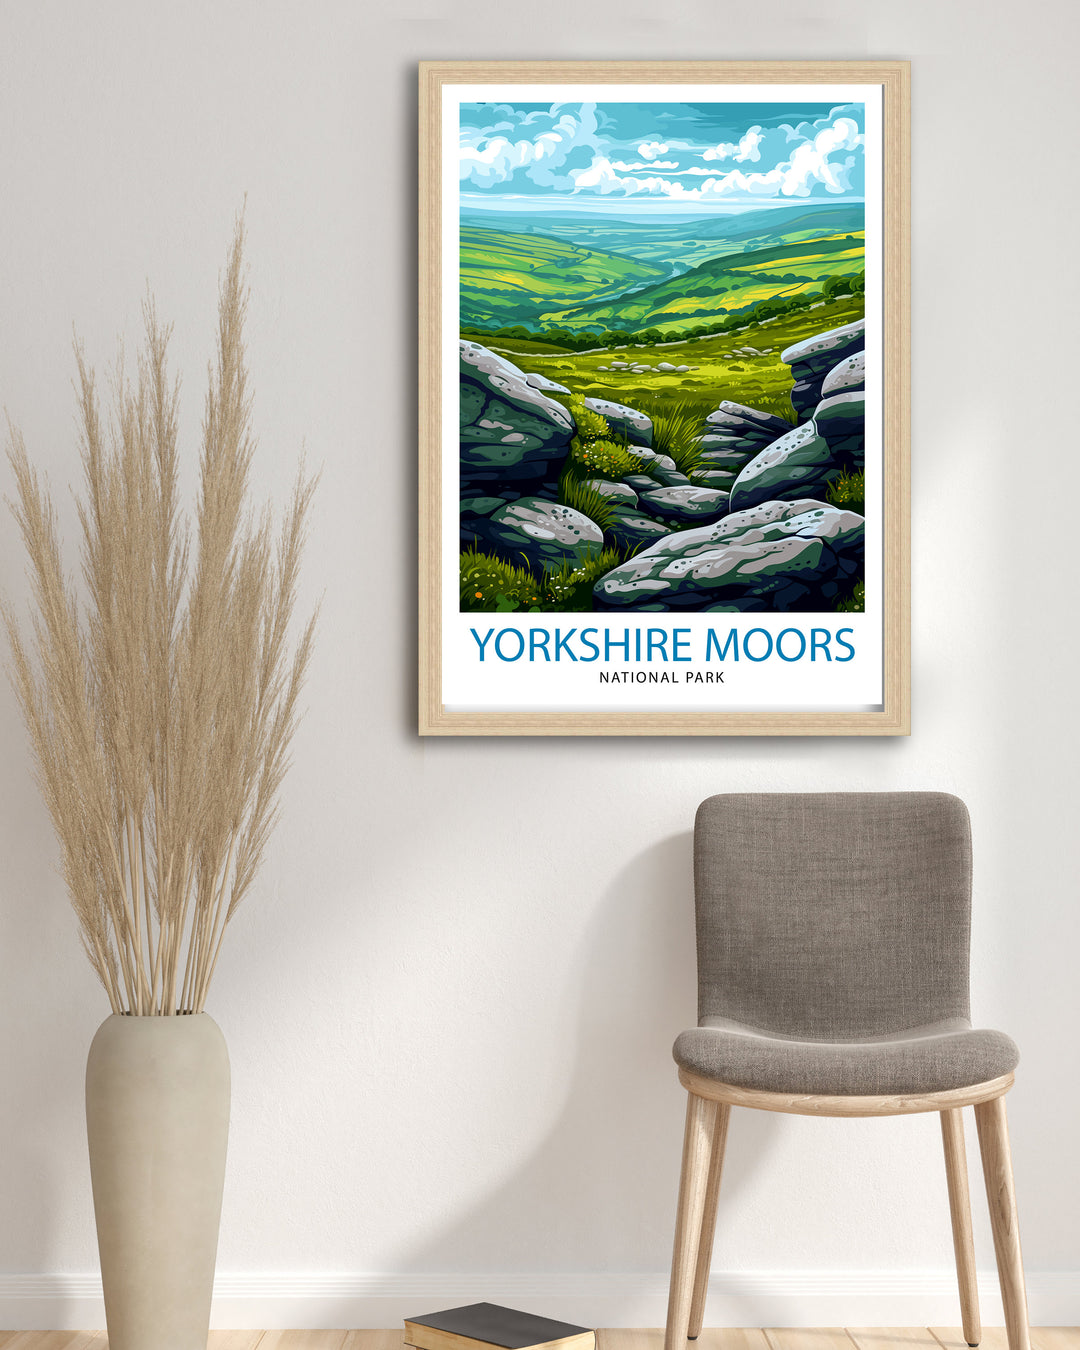 Yorkshire Moors Print English Countryside Art Heather Fields Poster British Moorland Wall Decor Wild Landscape Illustration Rural England